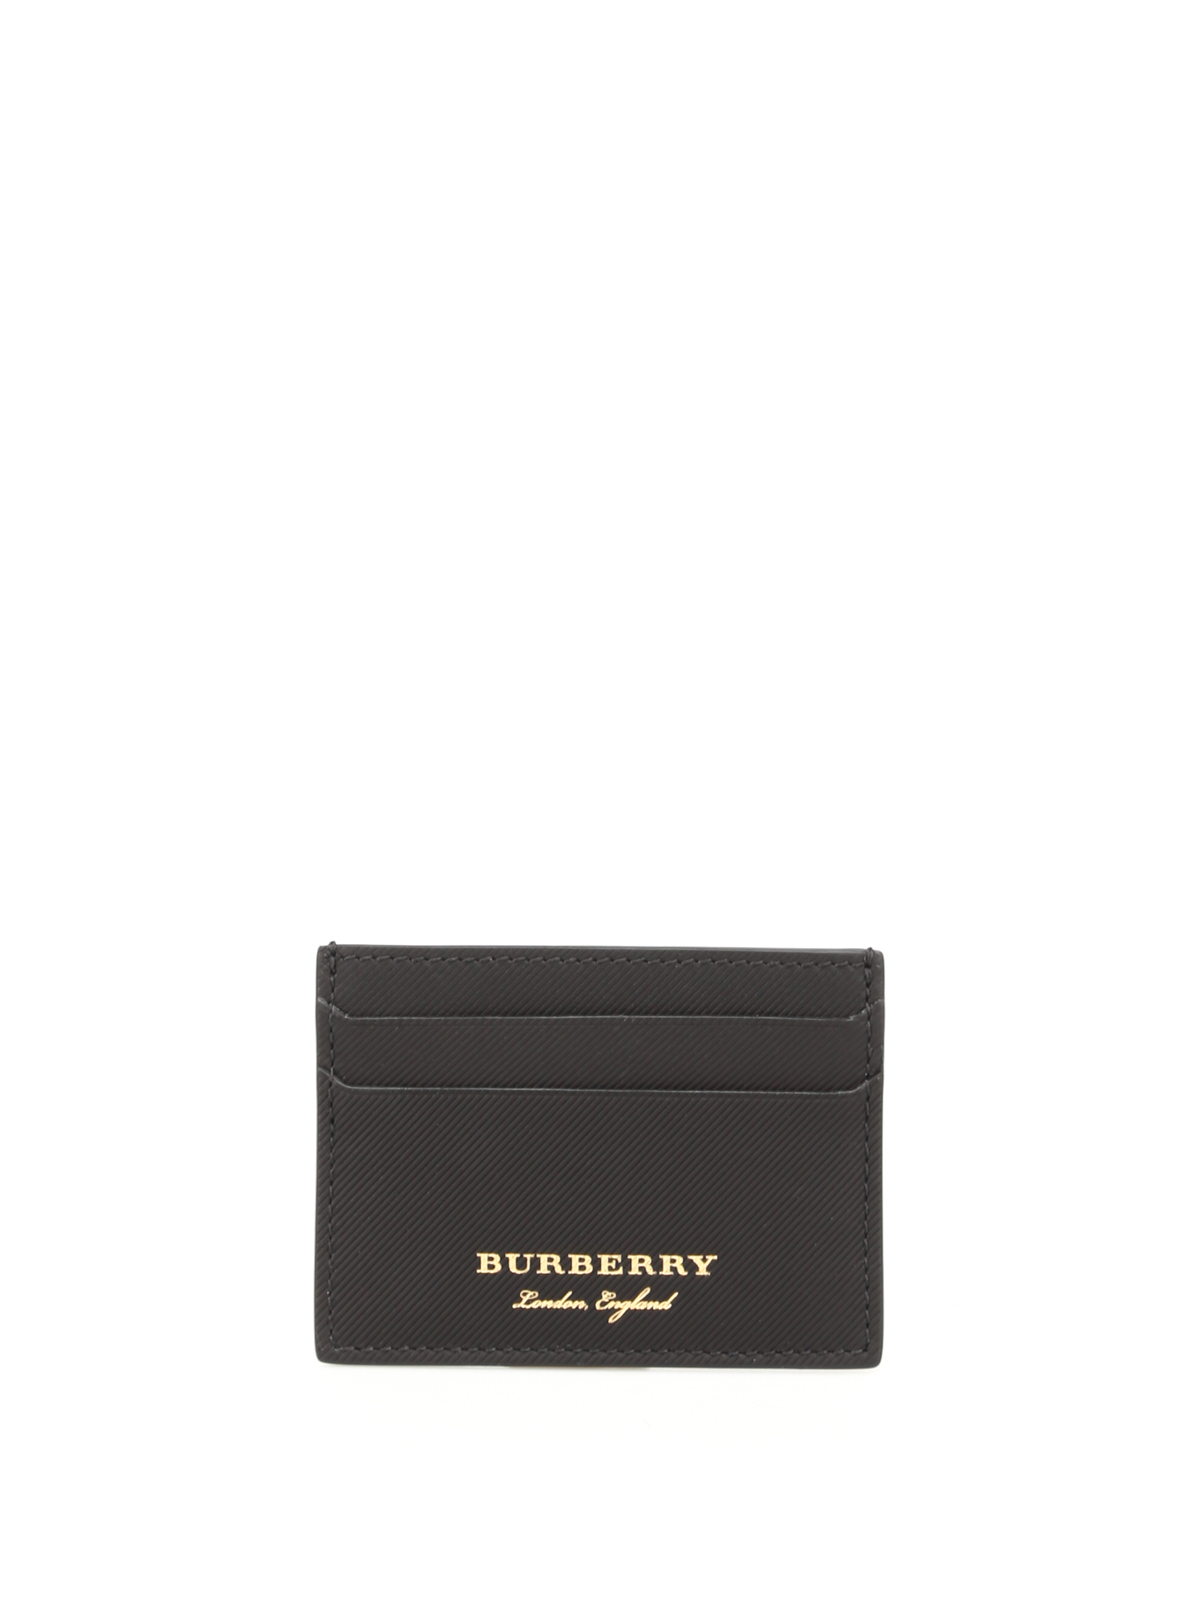 Burberry Card Holder Black on Sale, SAVE 39% 